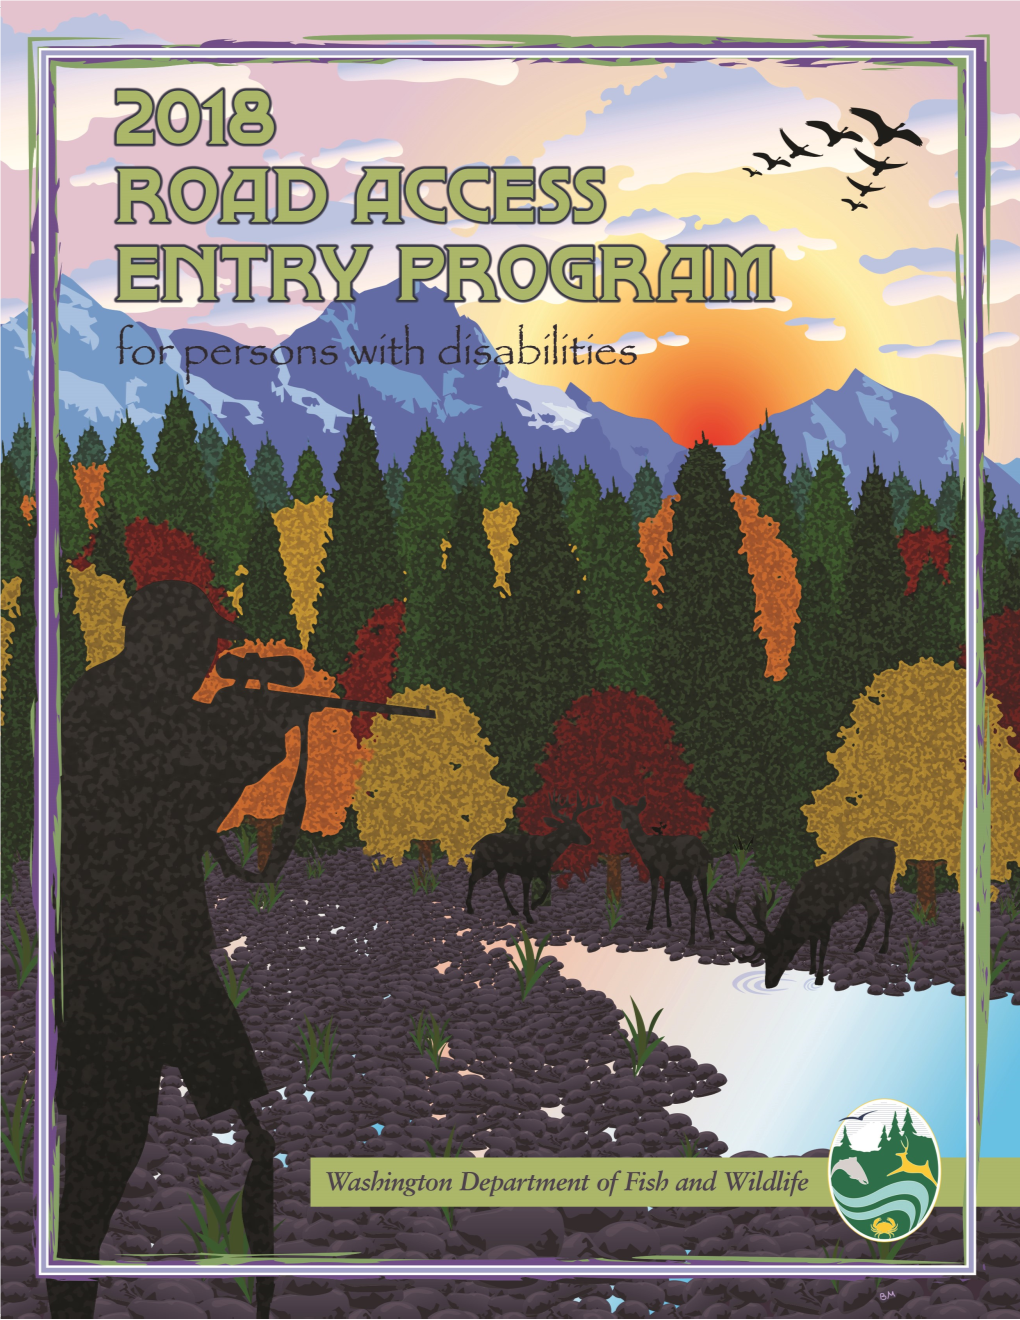 2018 Road Access Program Cover Winner